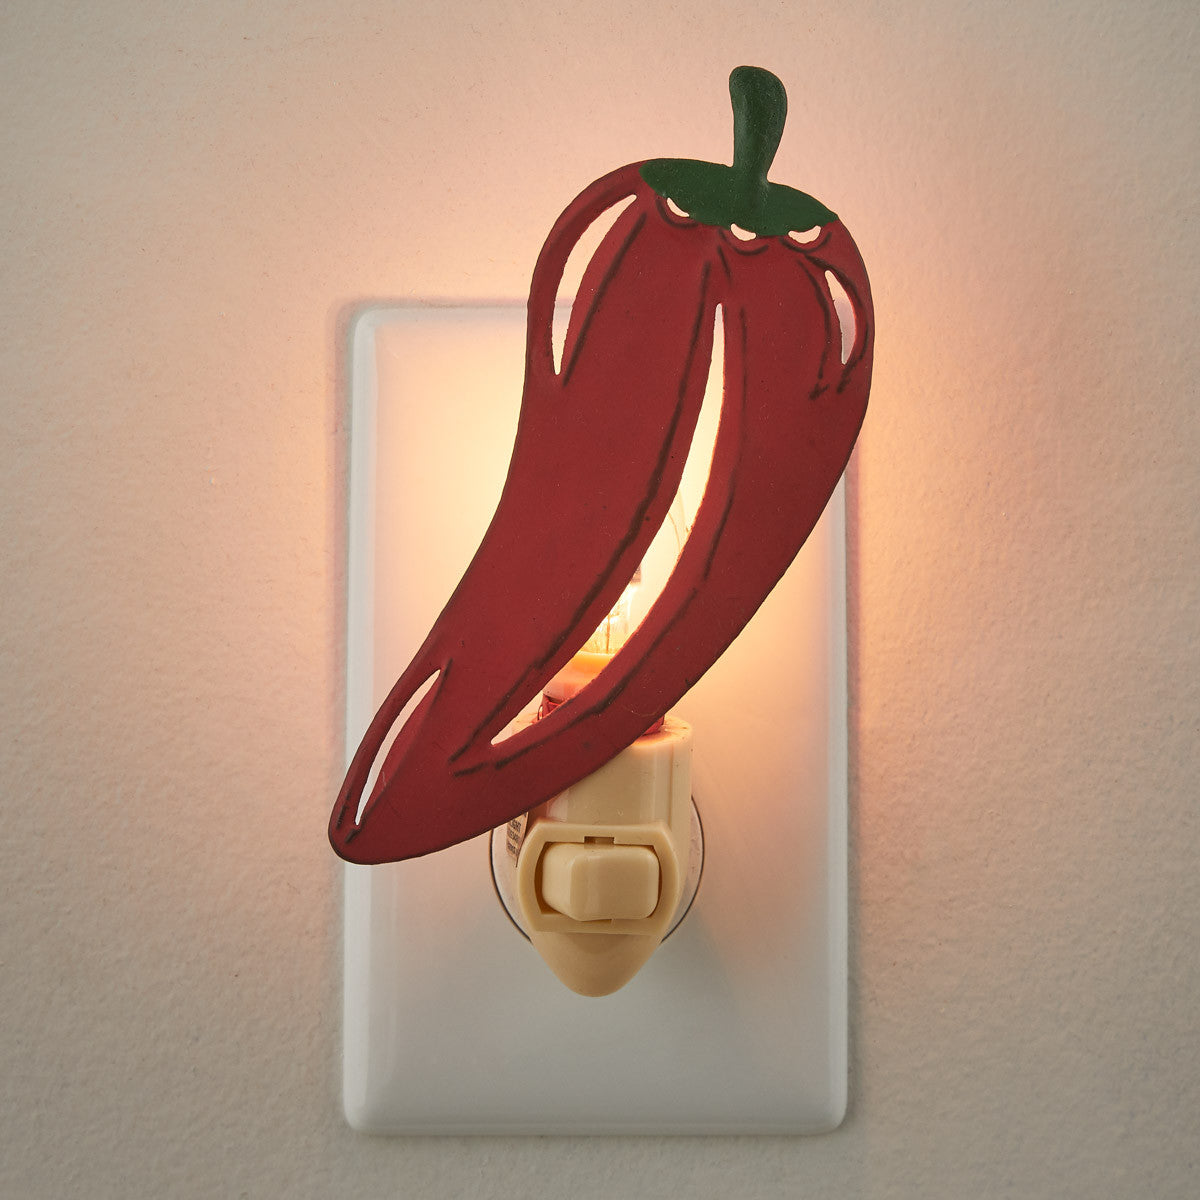 Chili Pepper Night Light - Park Designs